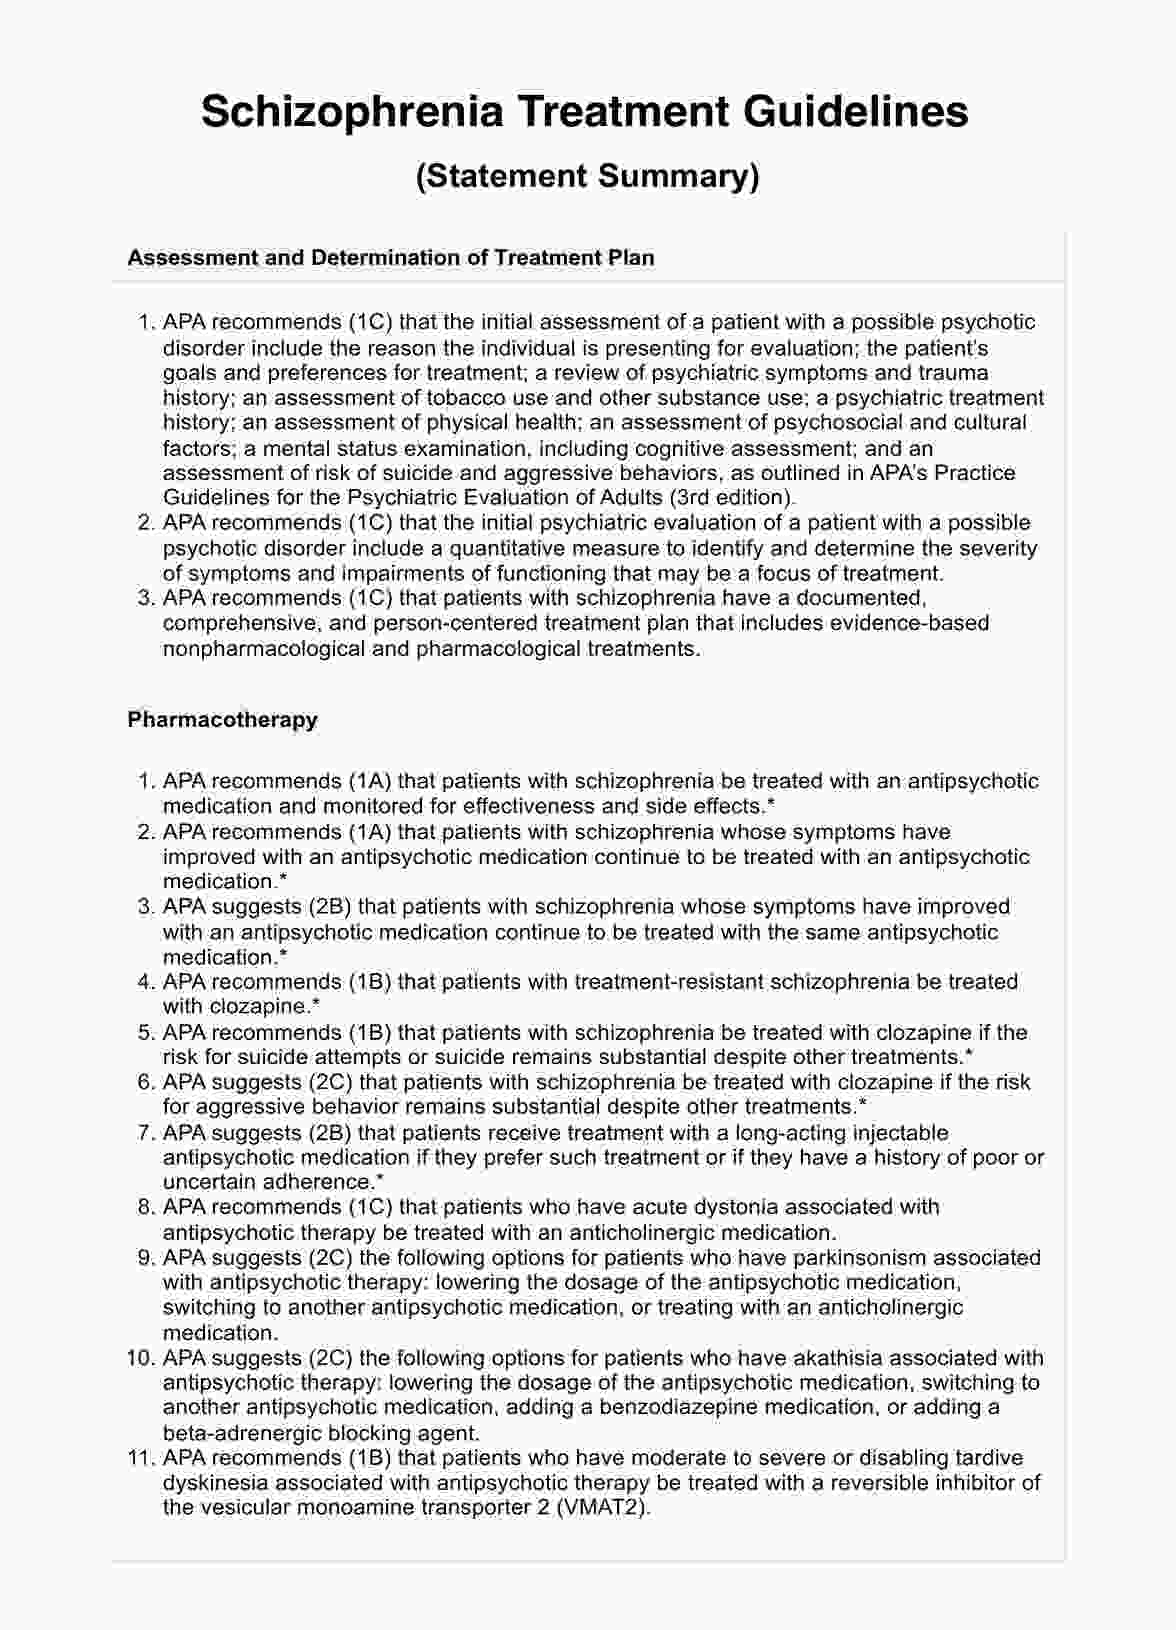 Schizophrenia Treatment Guidelines PDF Example